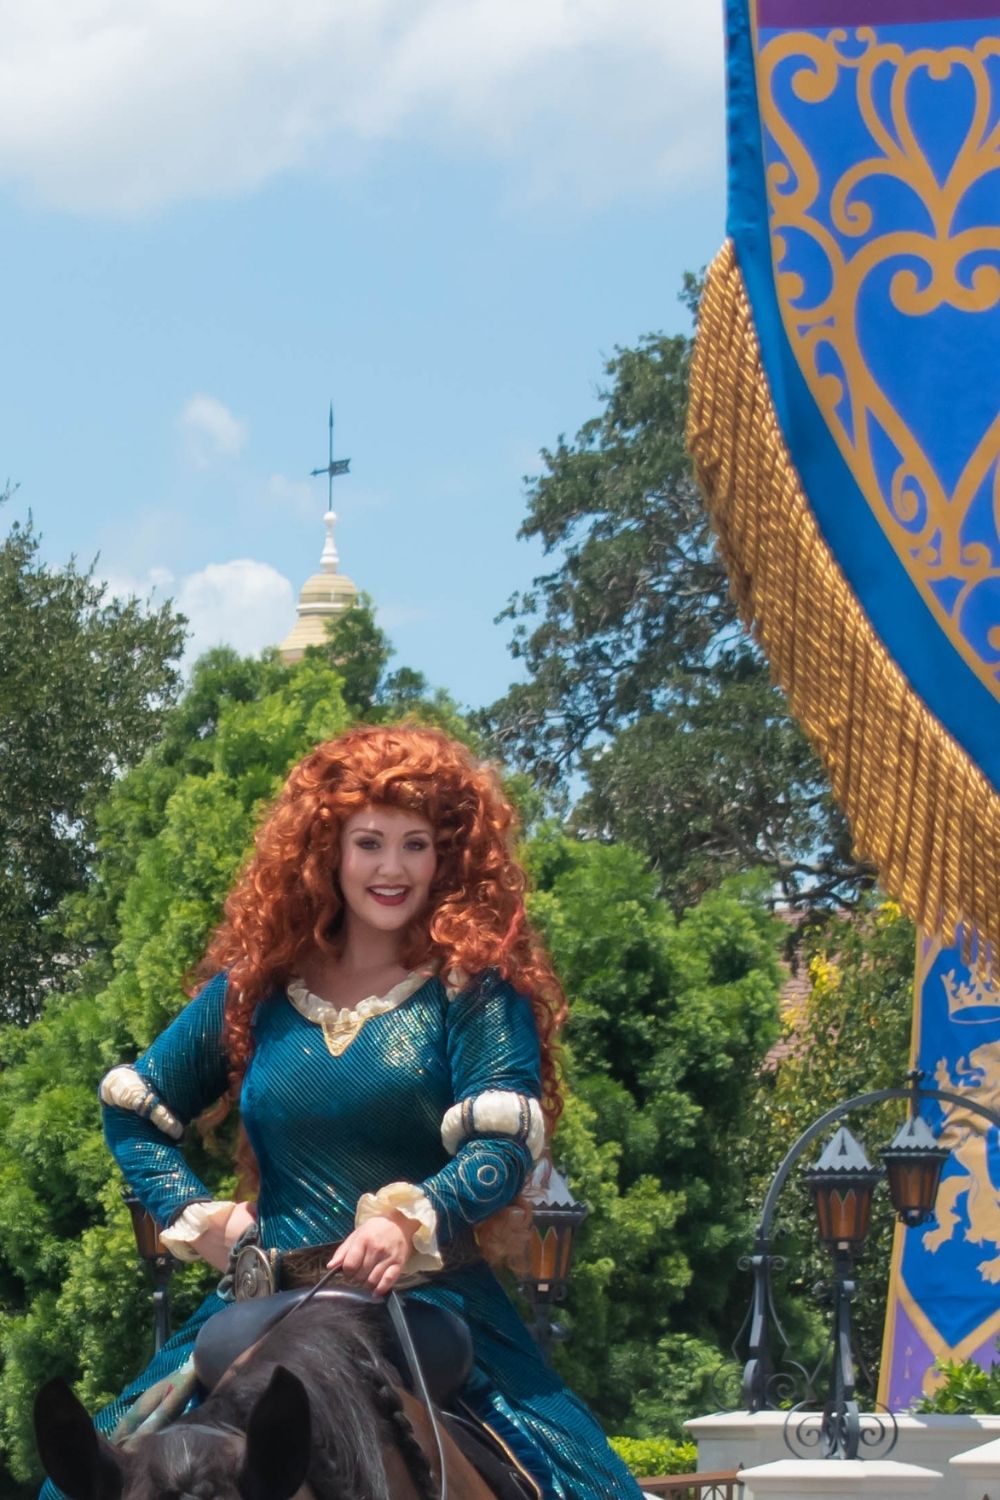 Merida, from the Disney Princess movie Brave, rides a horse at Disney World